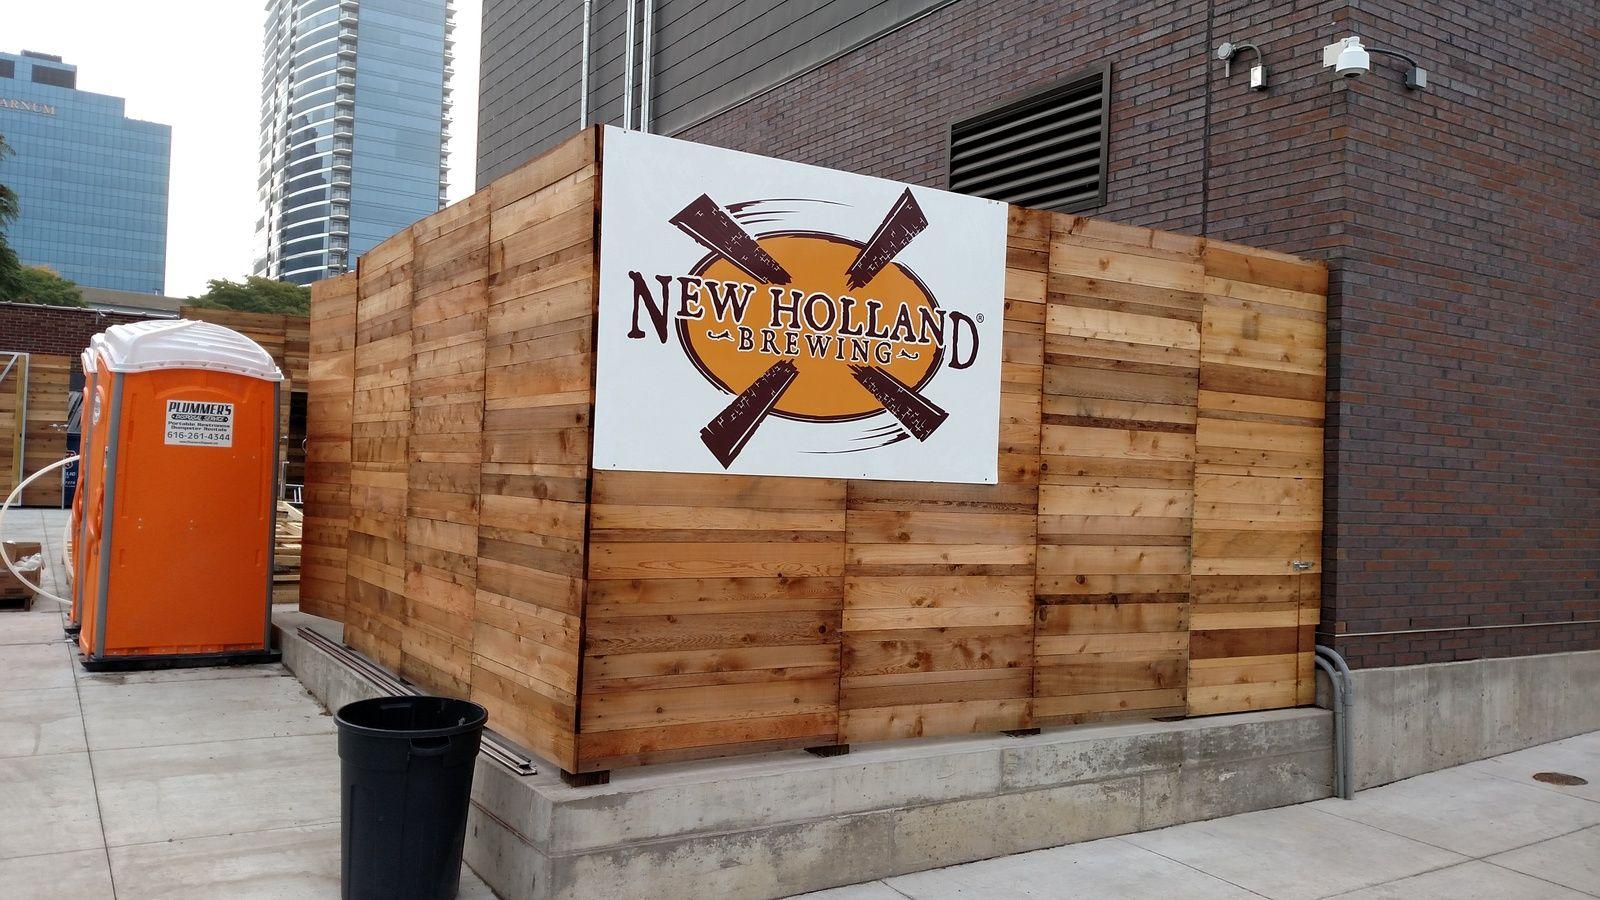 New Holland Brewery Logo - New Holland Brewery - The Knickerbocker | Portfolio | Fence ...